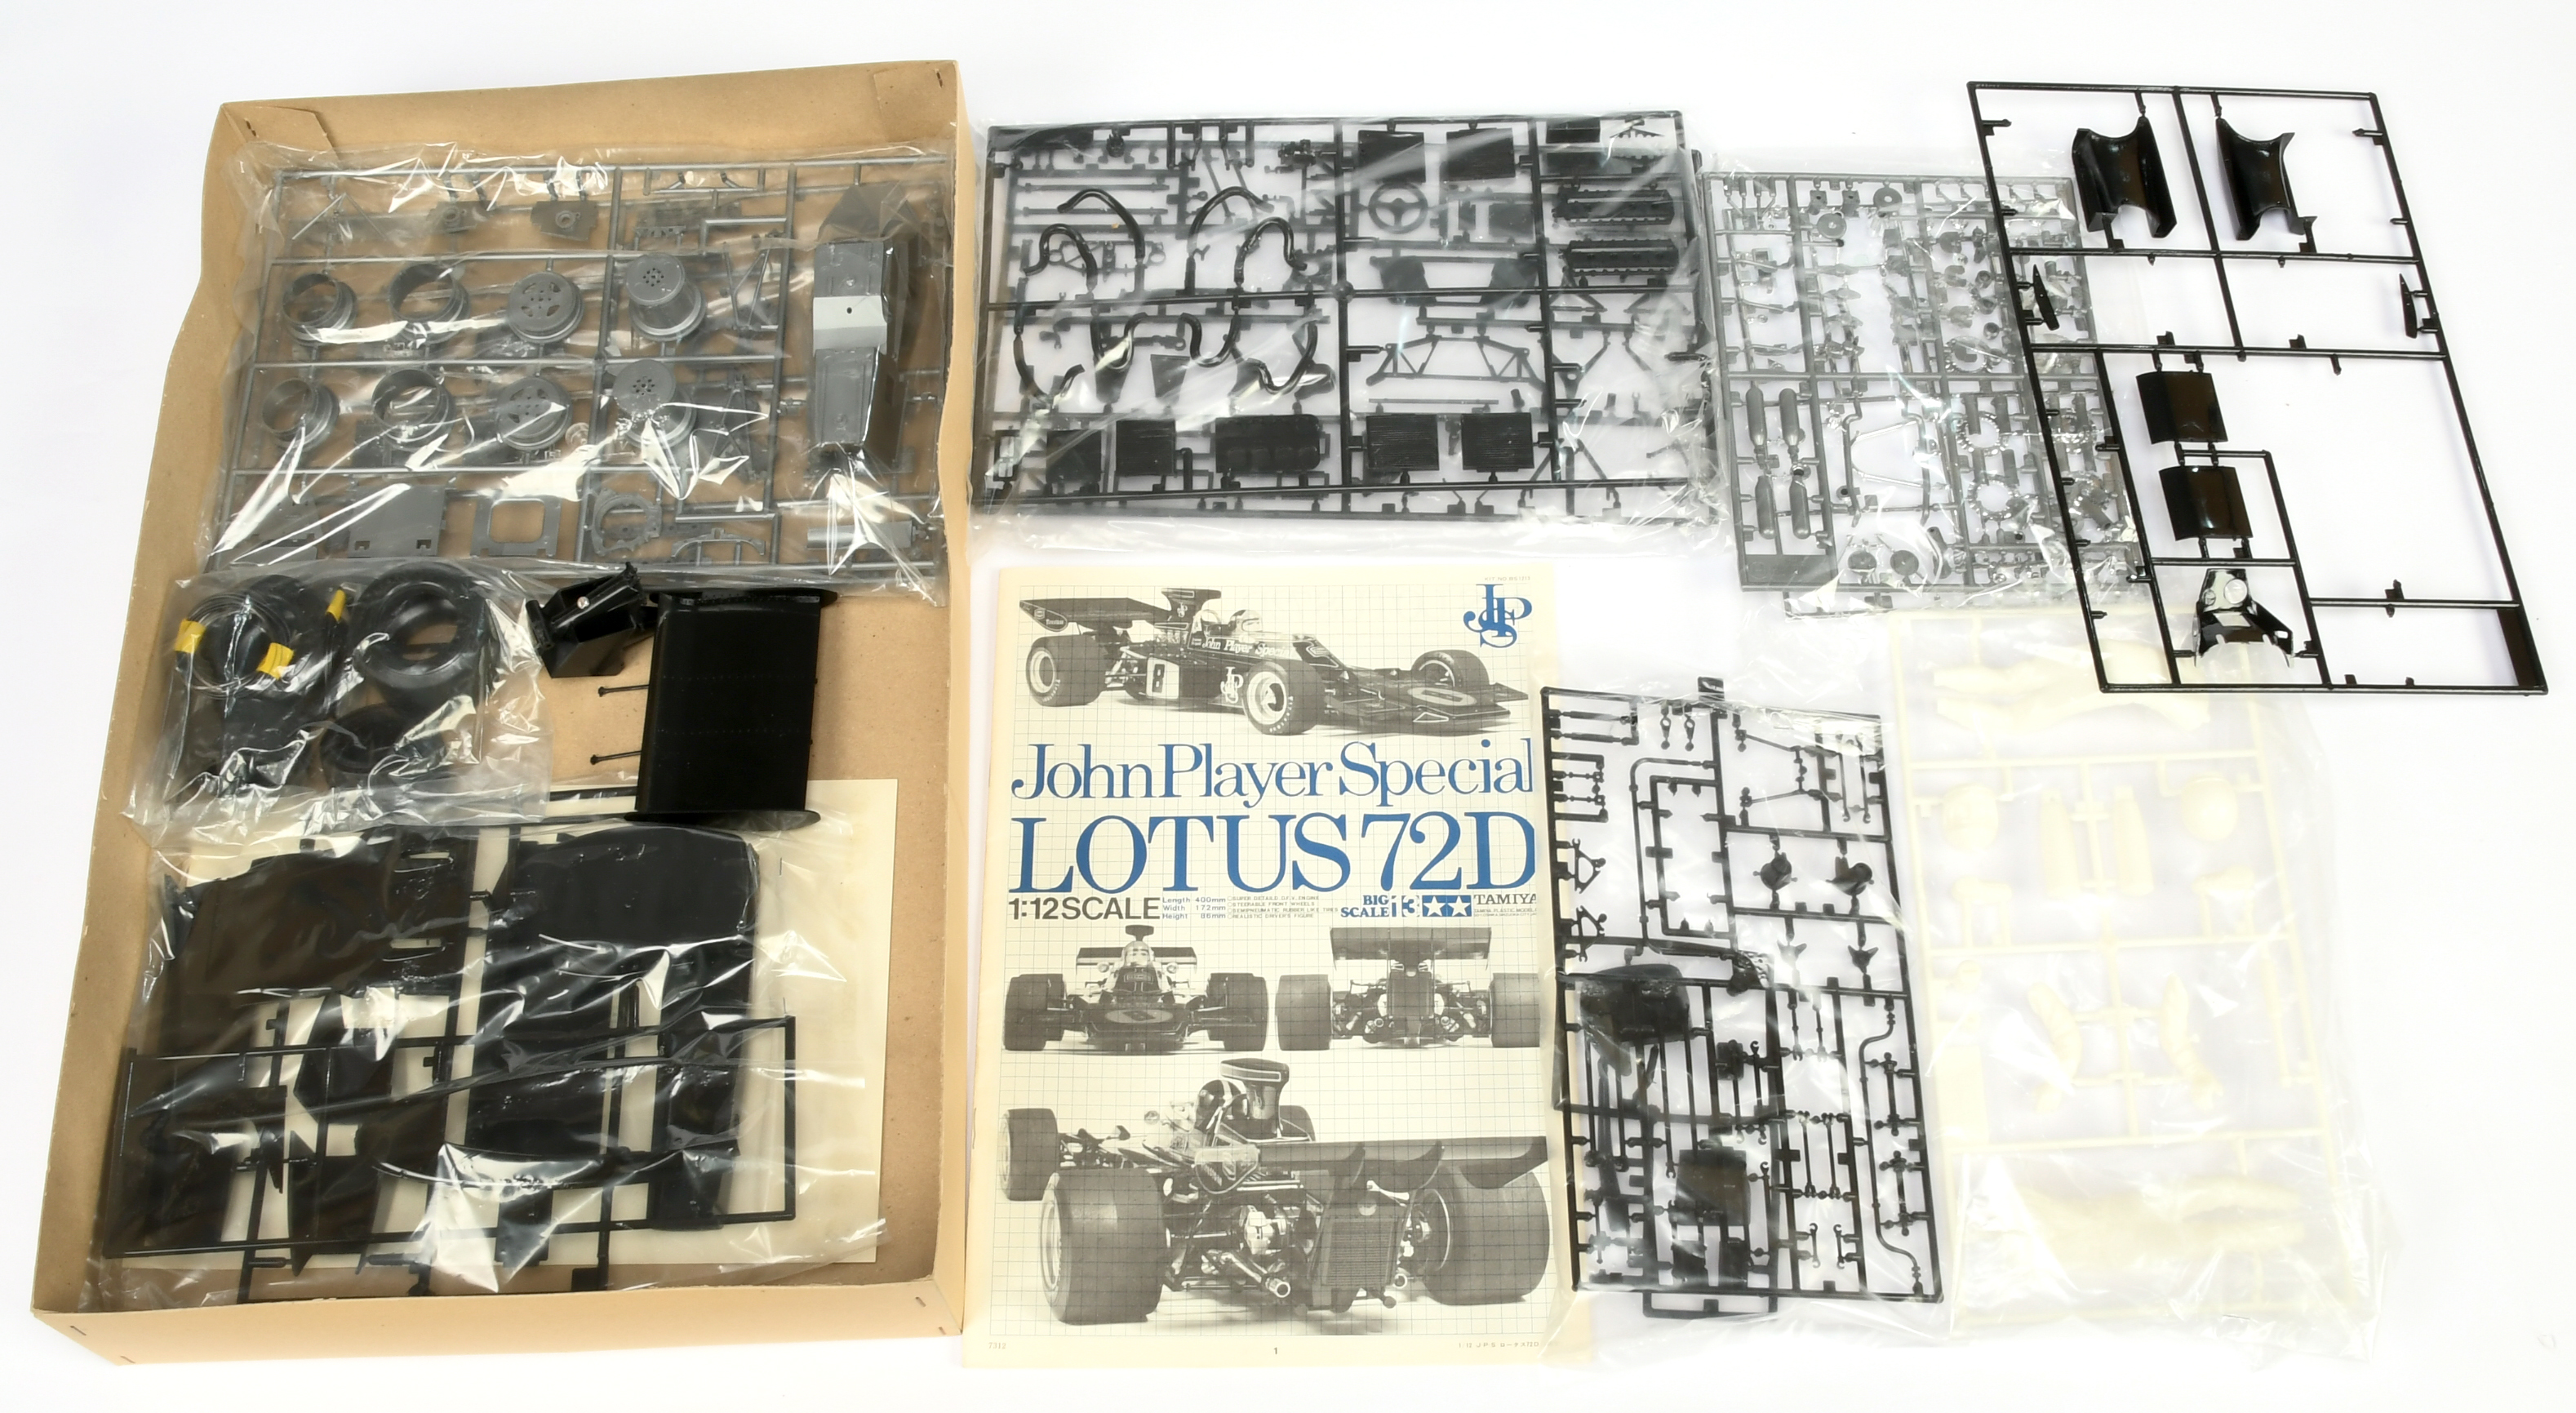 Tamiya (1/12th) Scale BS1213 Lotus 72D "John Player Special" Forumula 1 Racing Car Plastic Kit - ... - Image 2 of 2